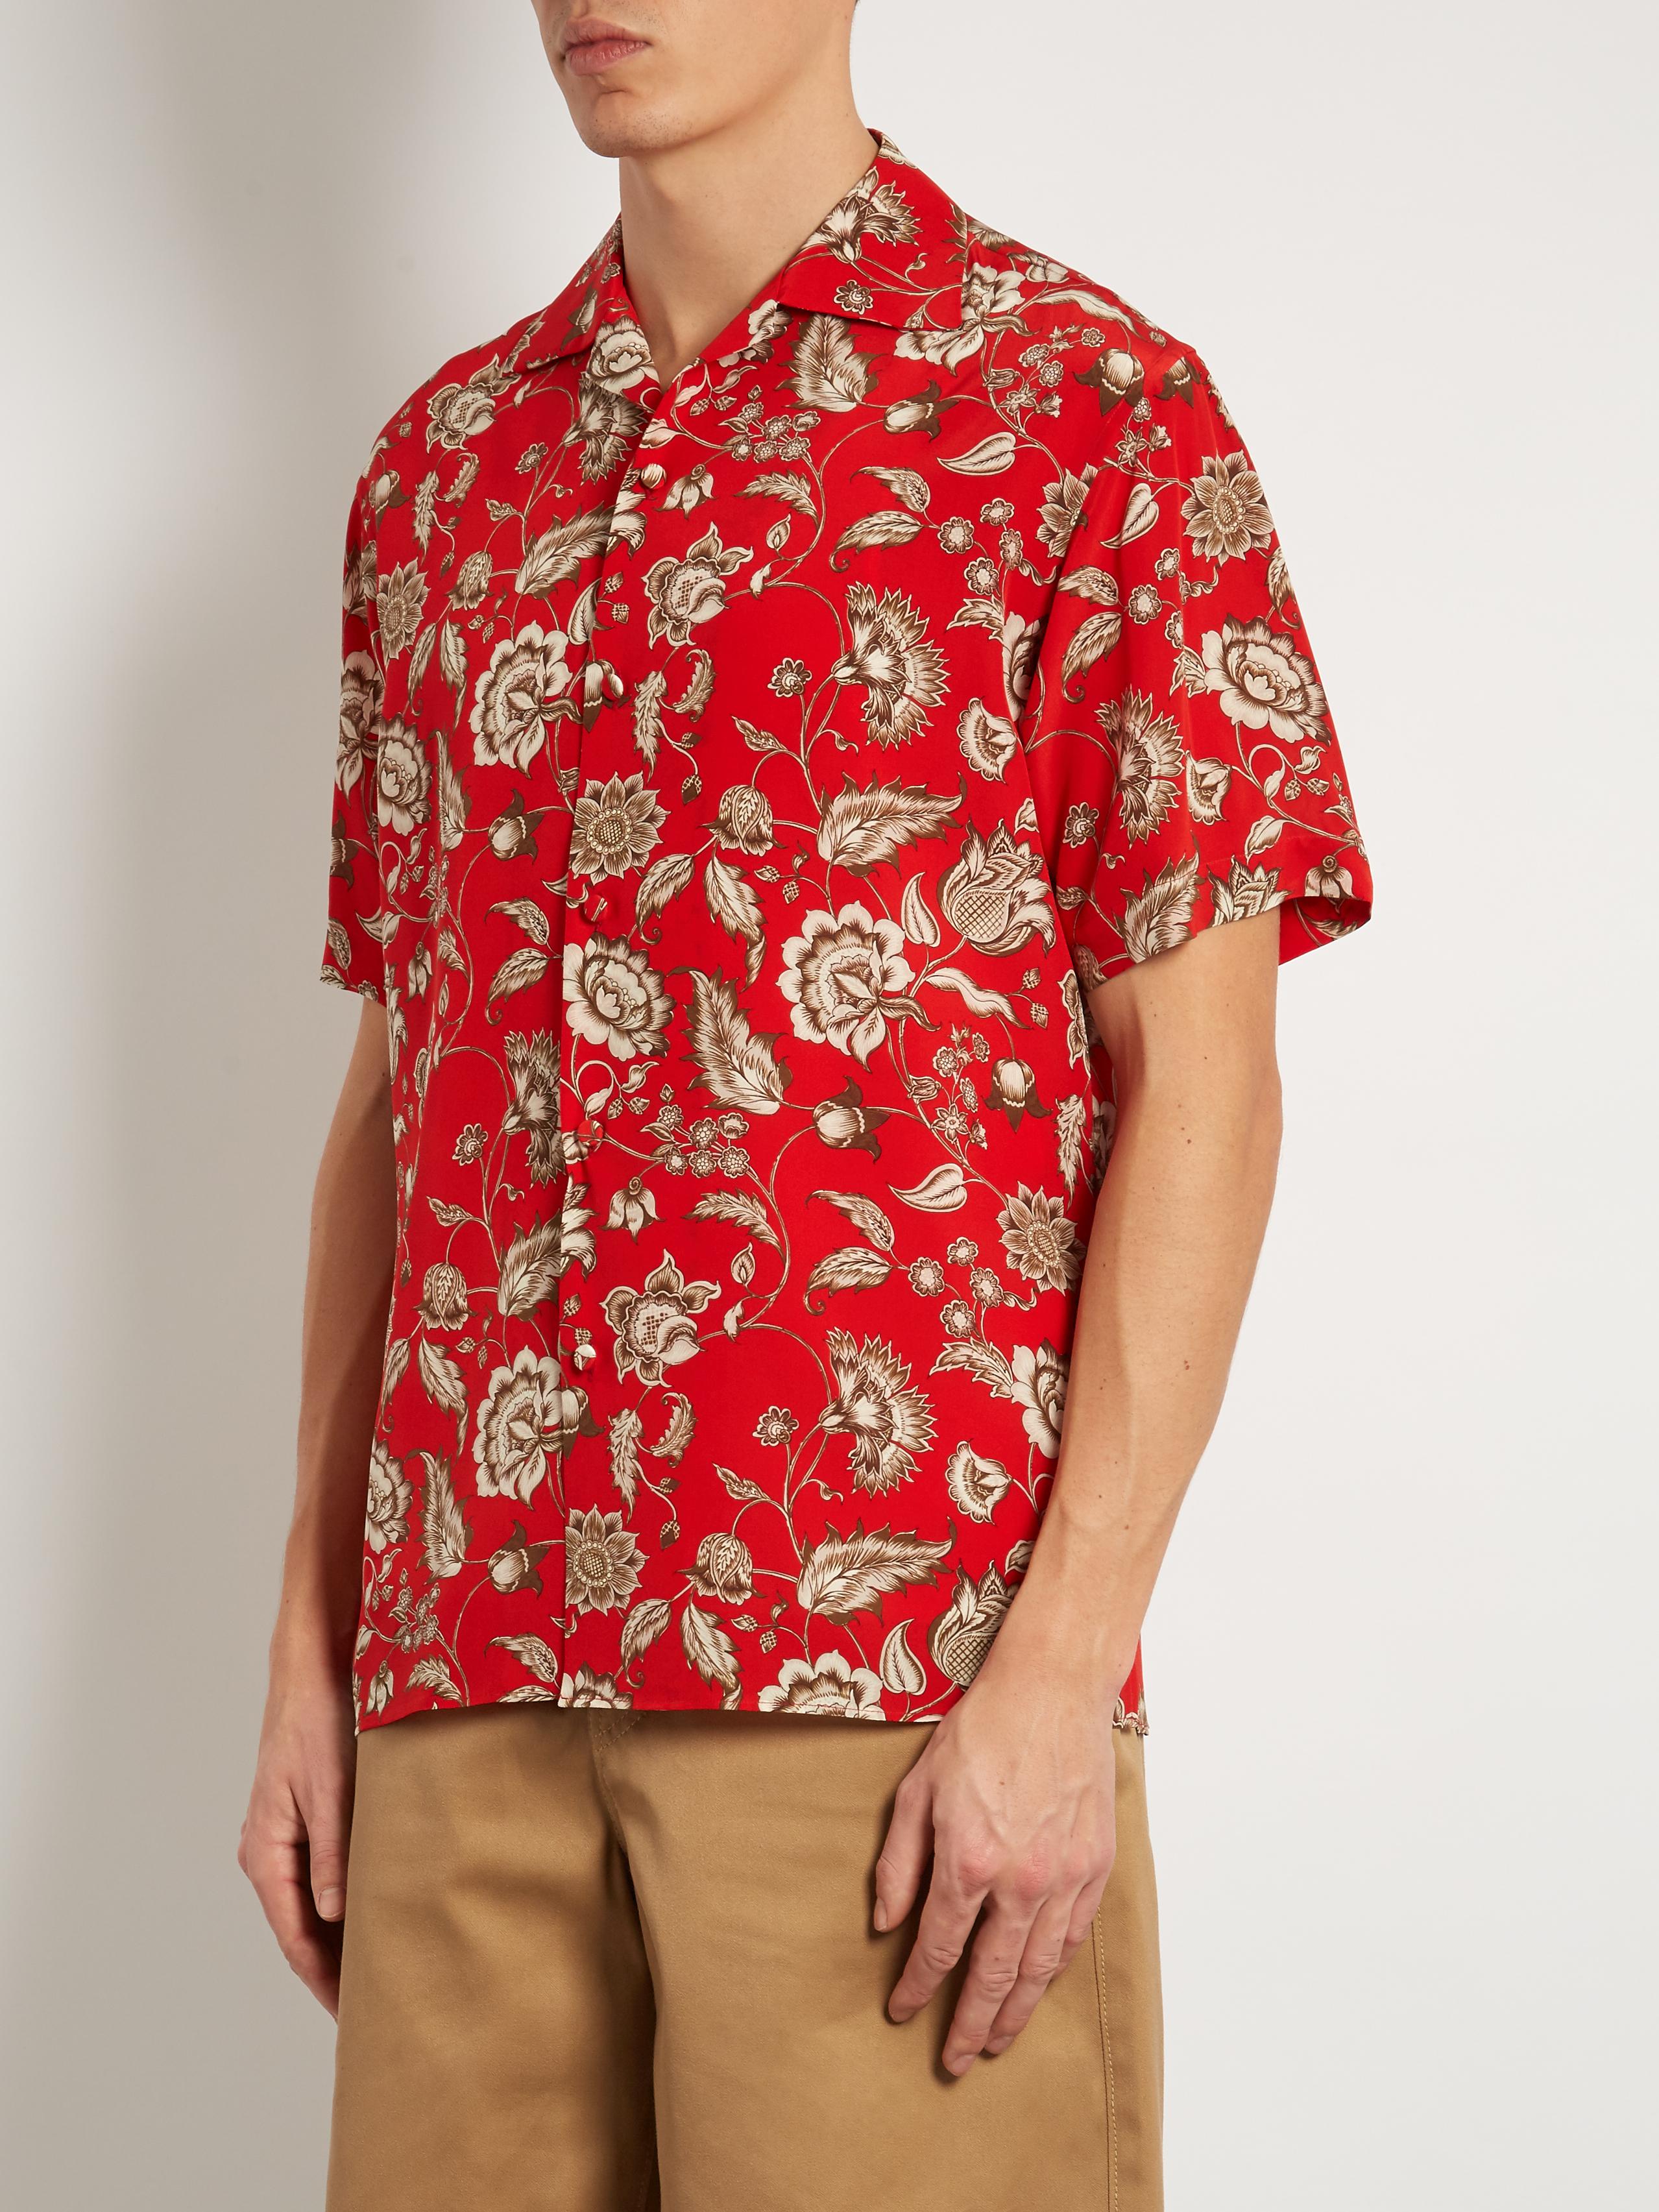 Gucci - Men's Printed Casual Shirt - Red - Silk - Shirts